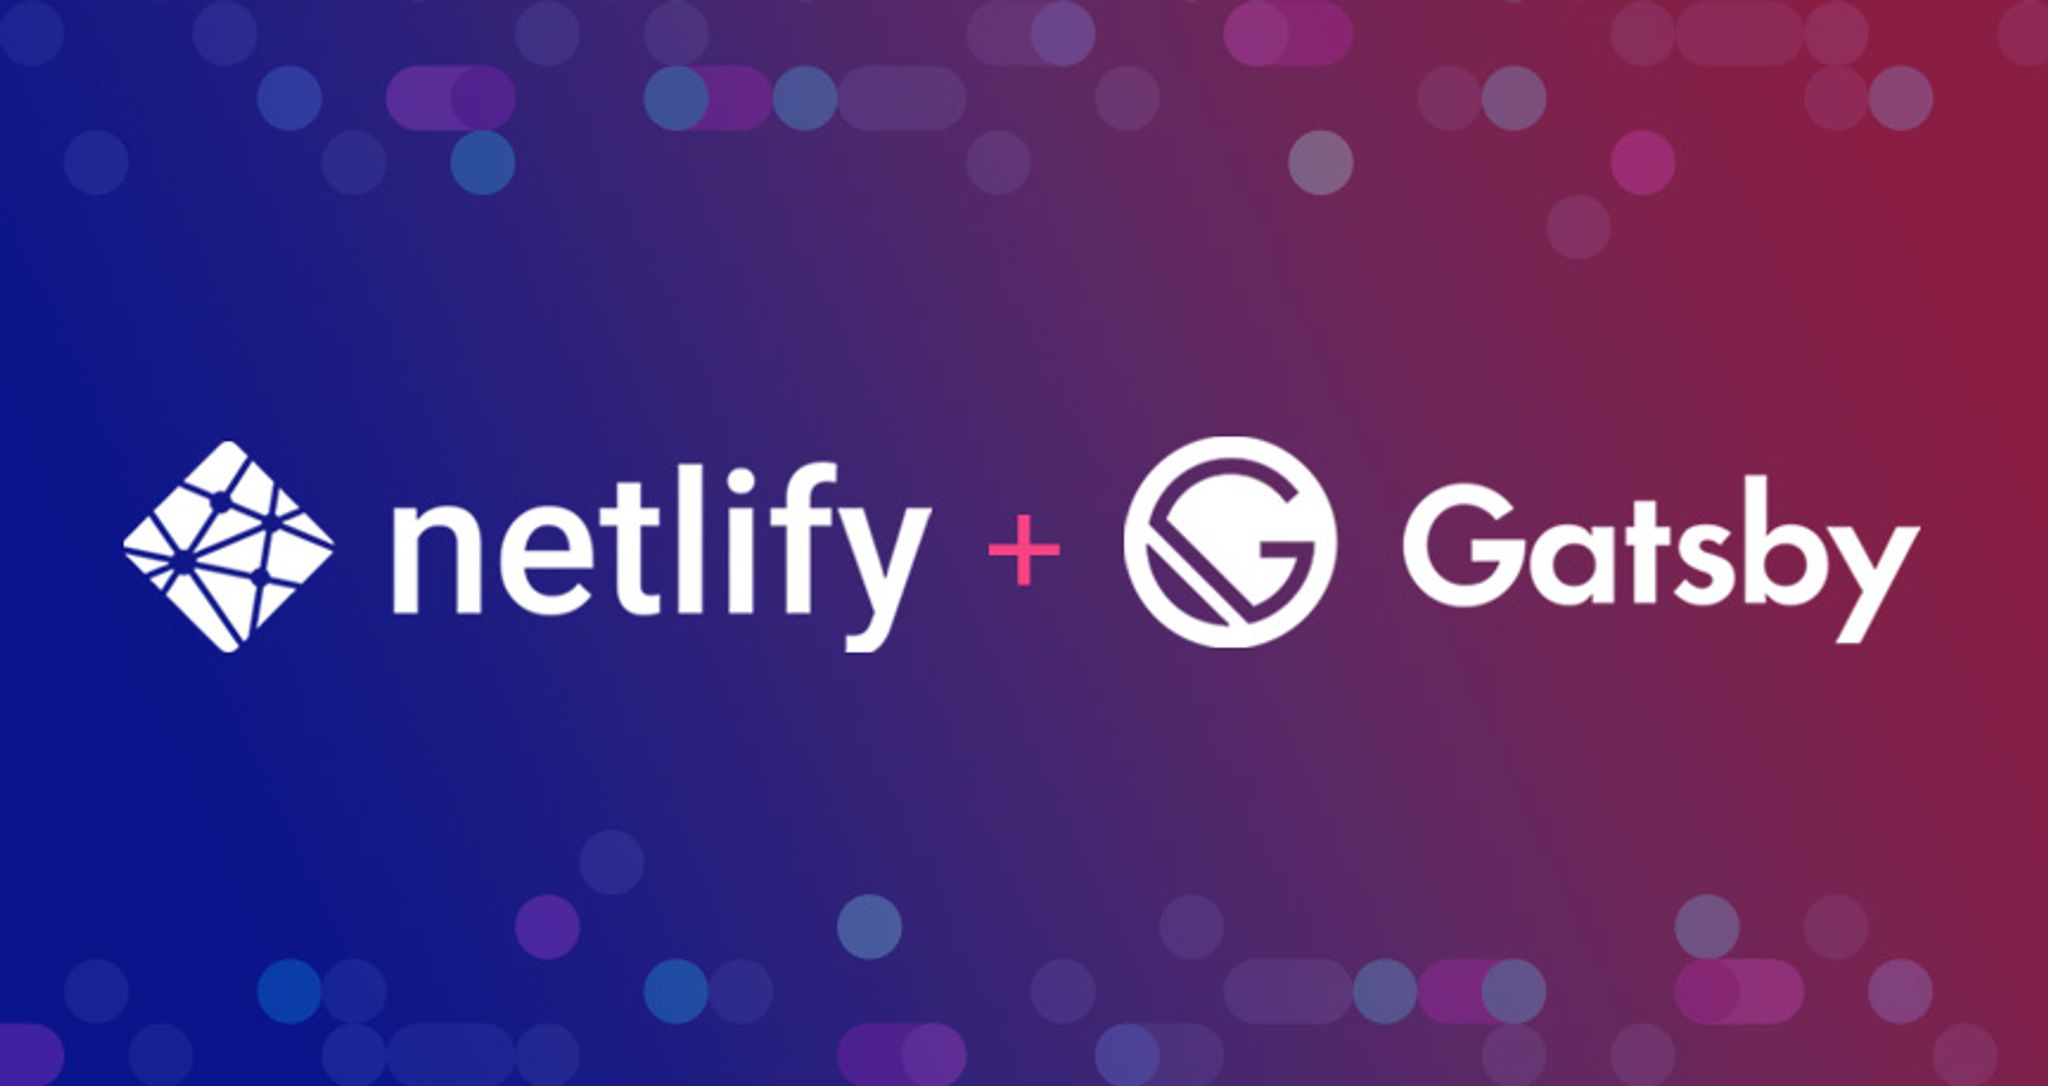 Netlify + Gatsby logos